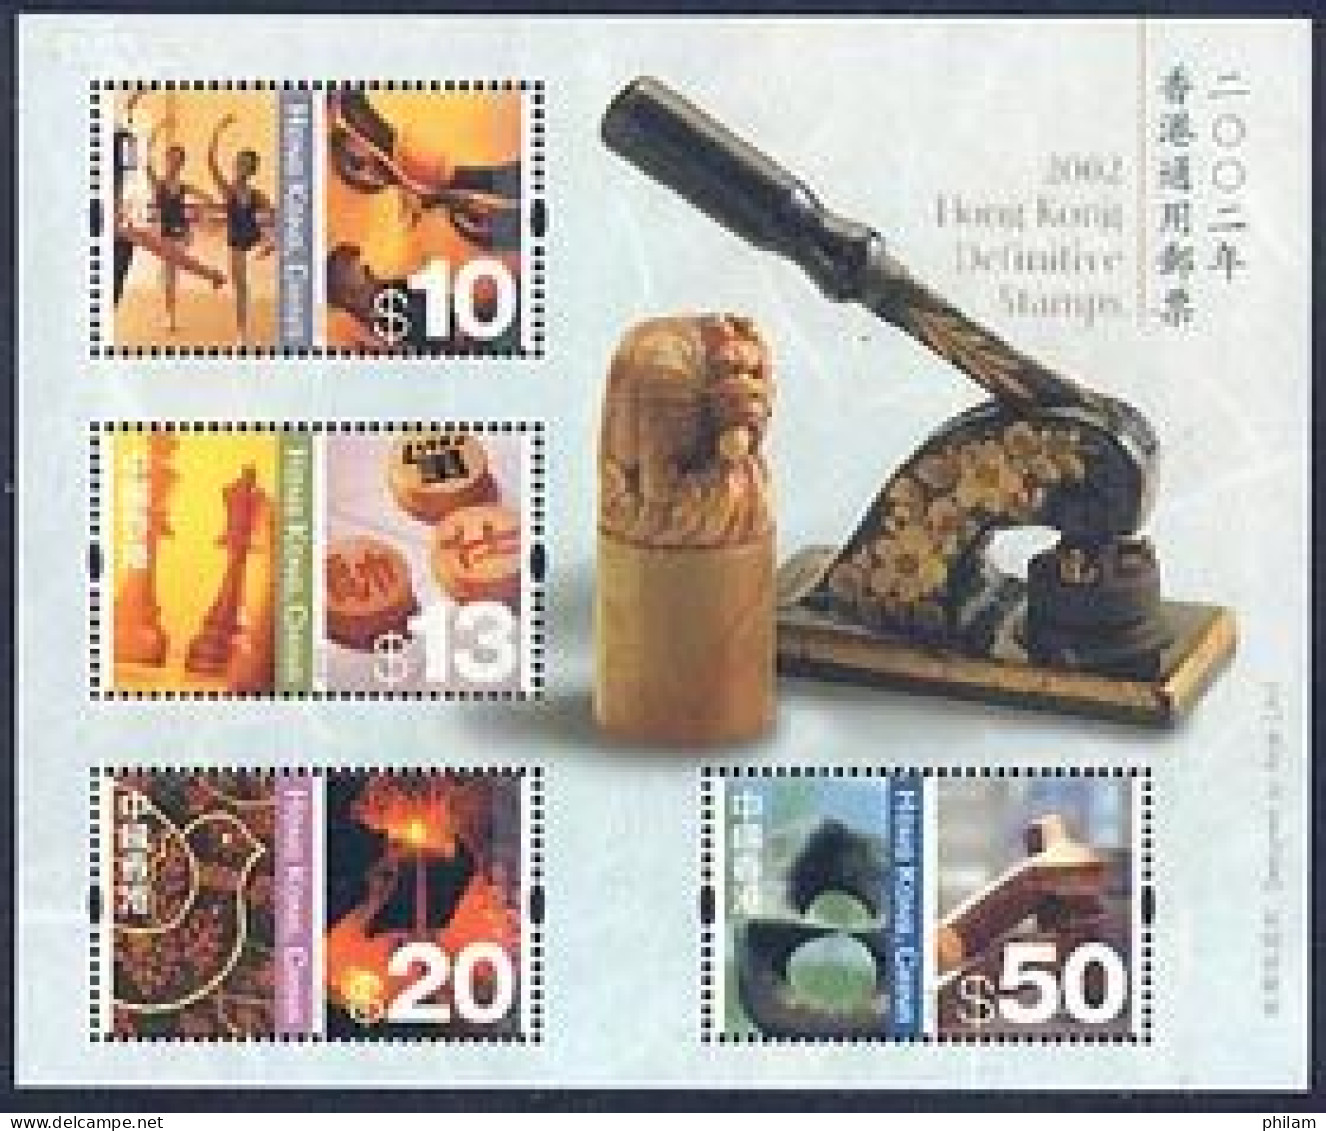 HONG KONG  2002 - Culture Orientale Et Occidentale - Hautes Valeurs - 4 V. - Unused Stamps